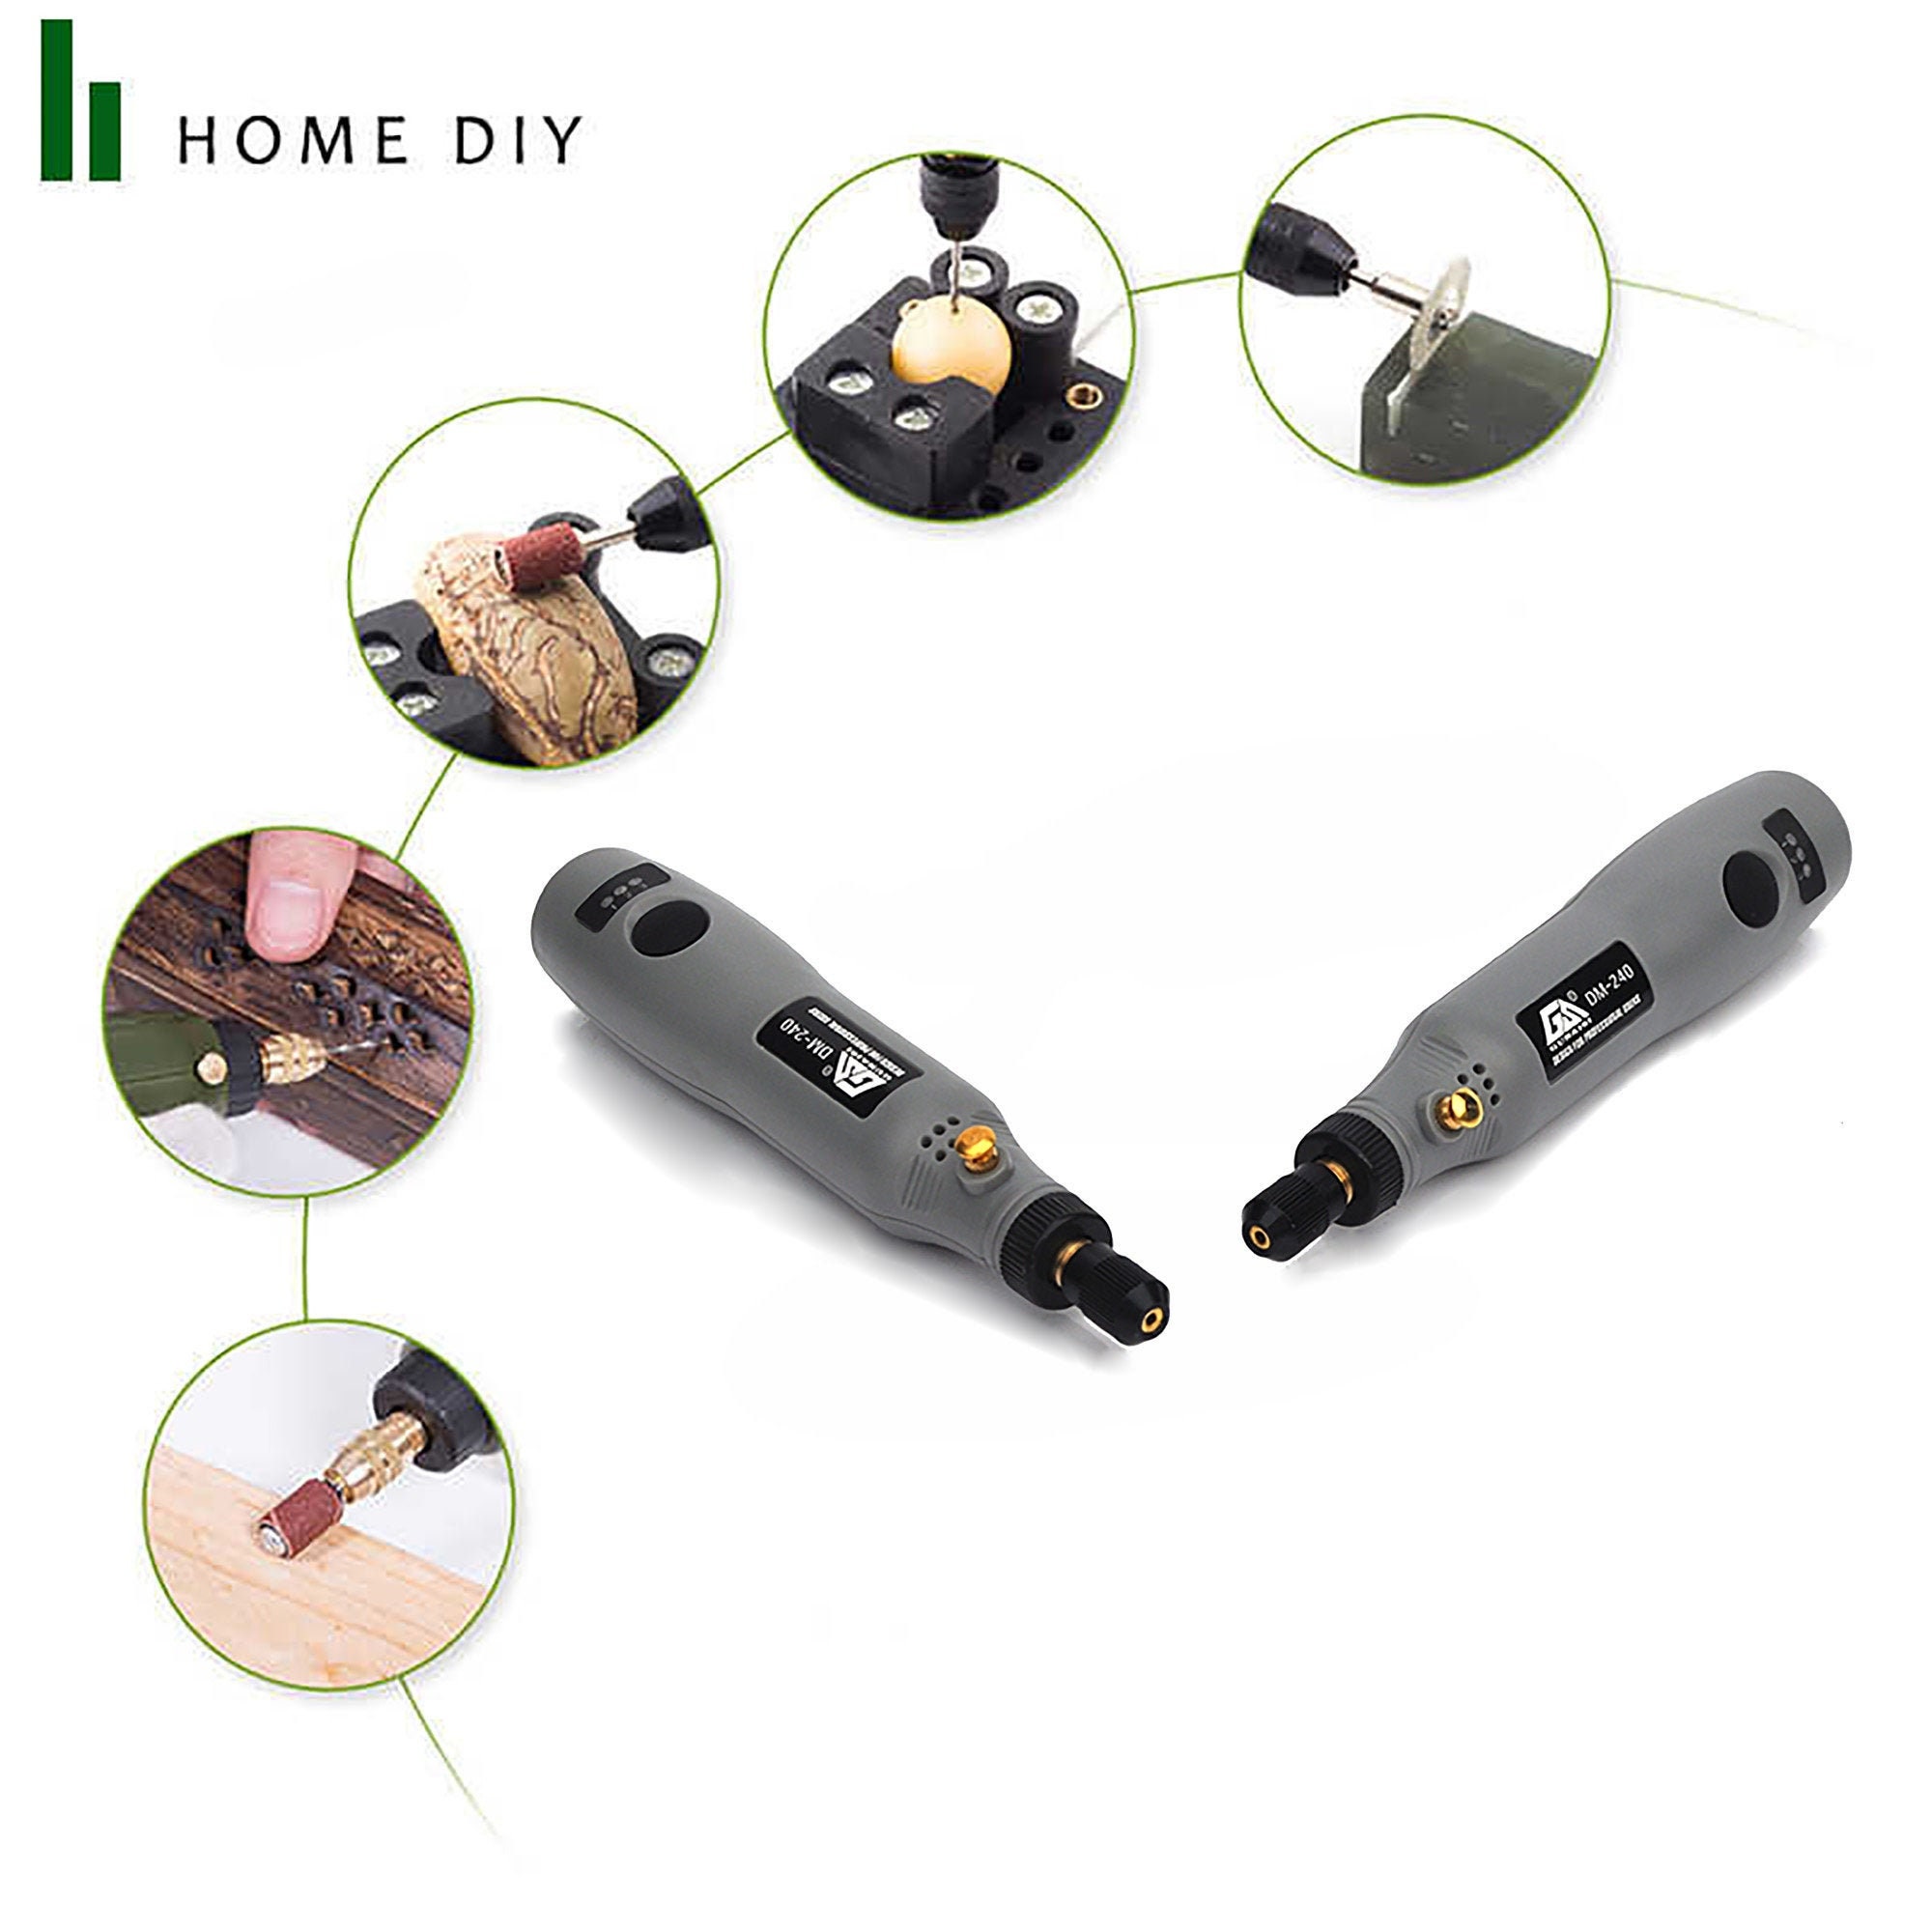 How to make portable mini Drill Machine at Home 